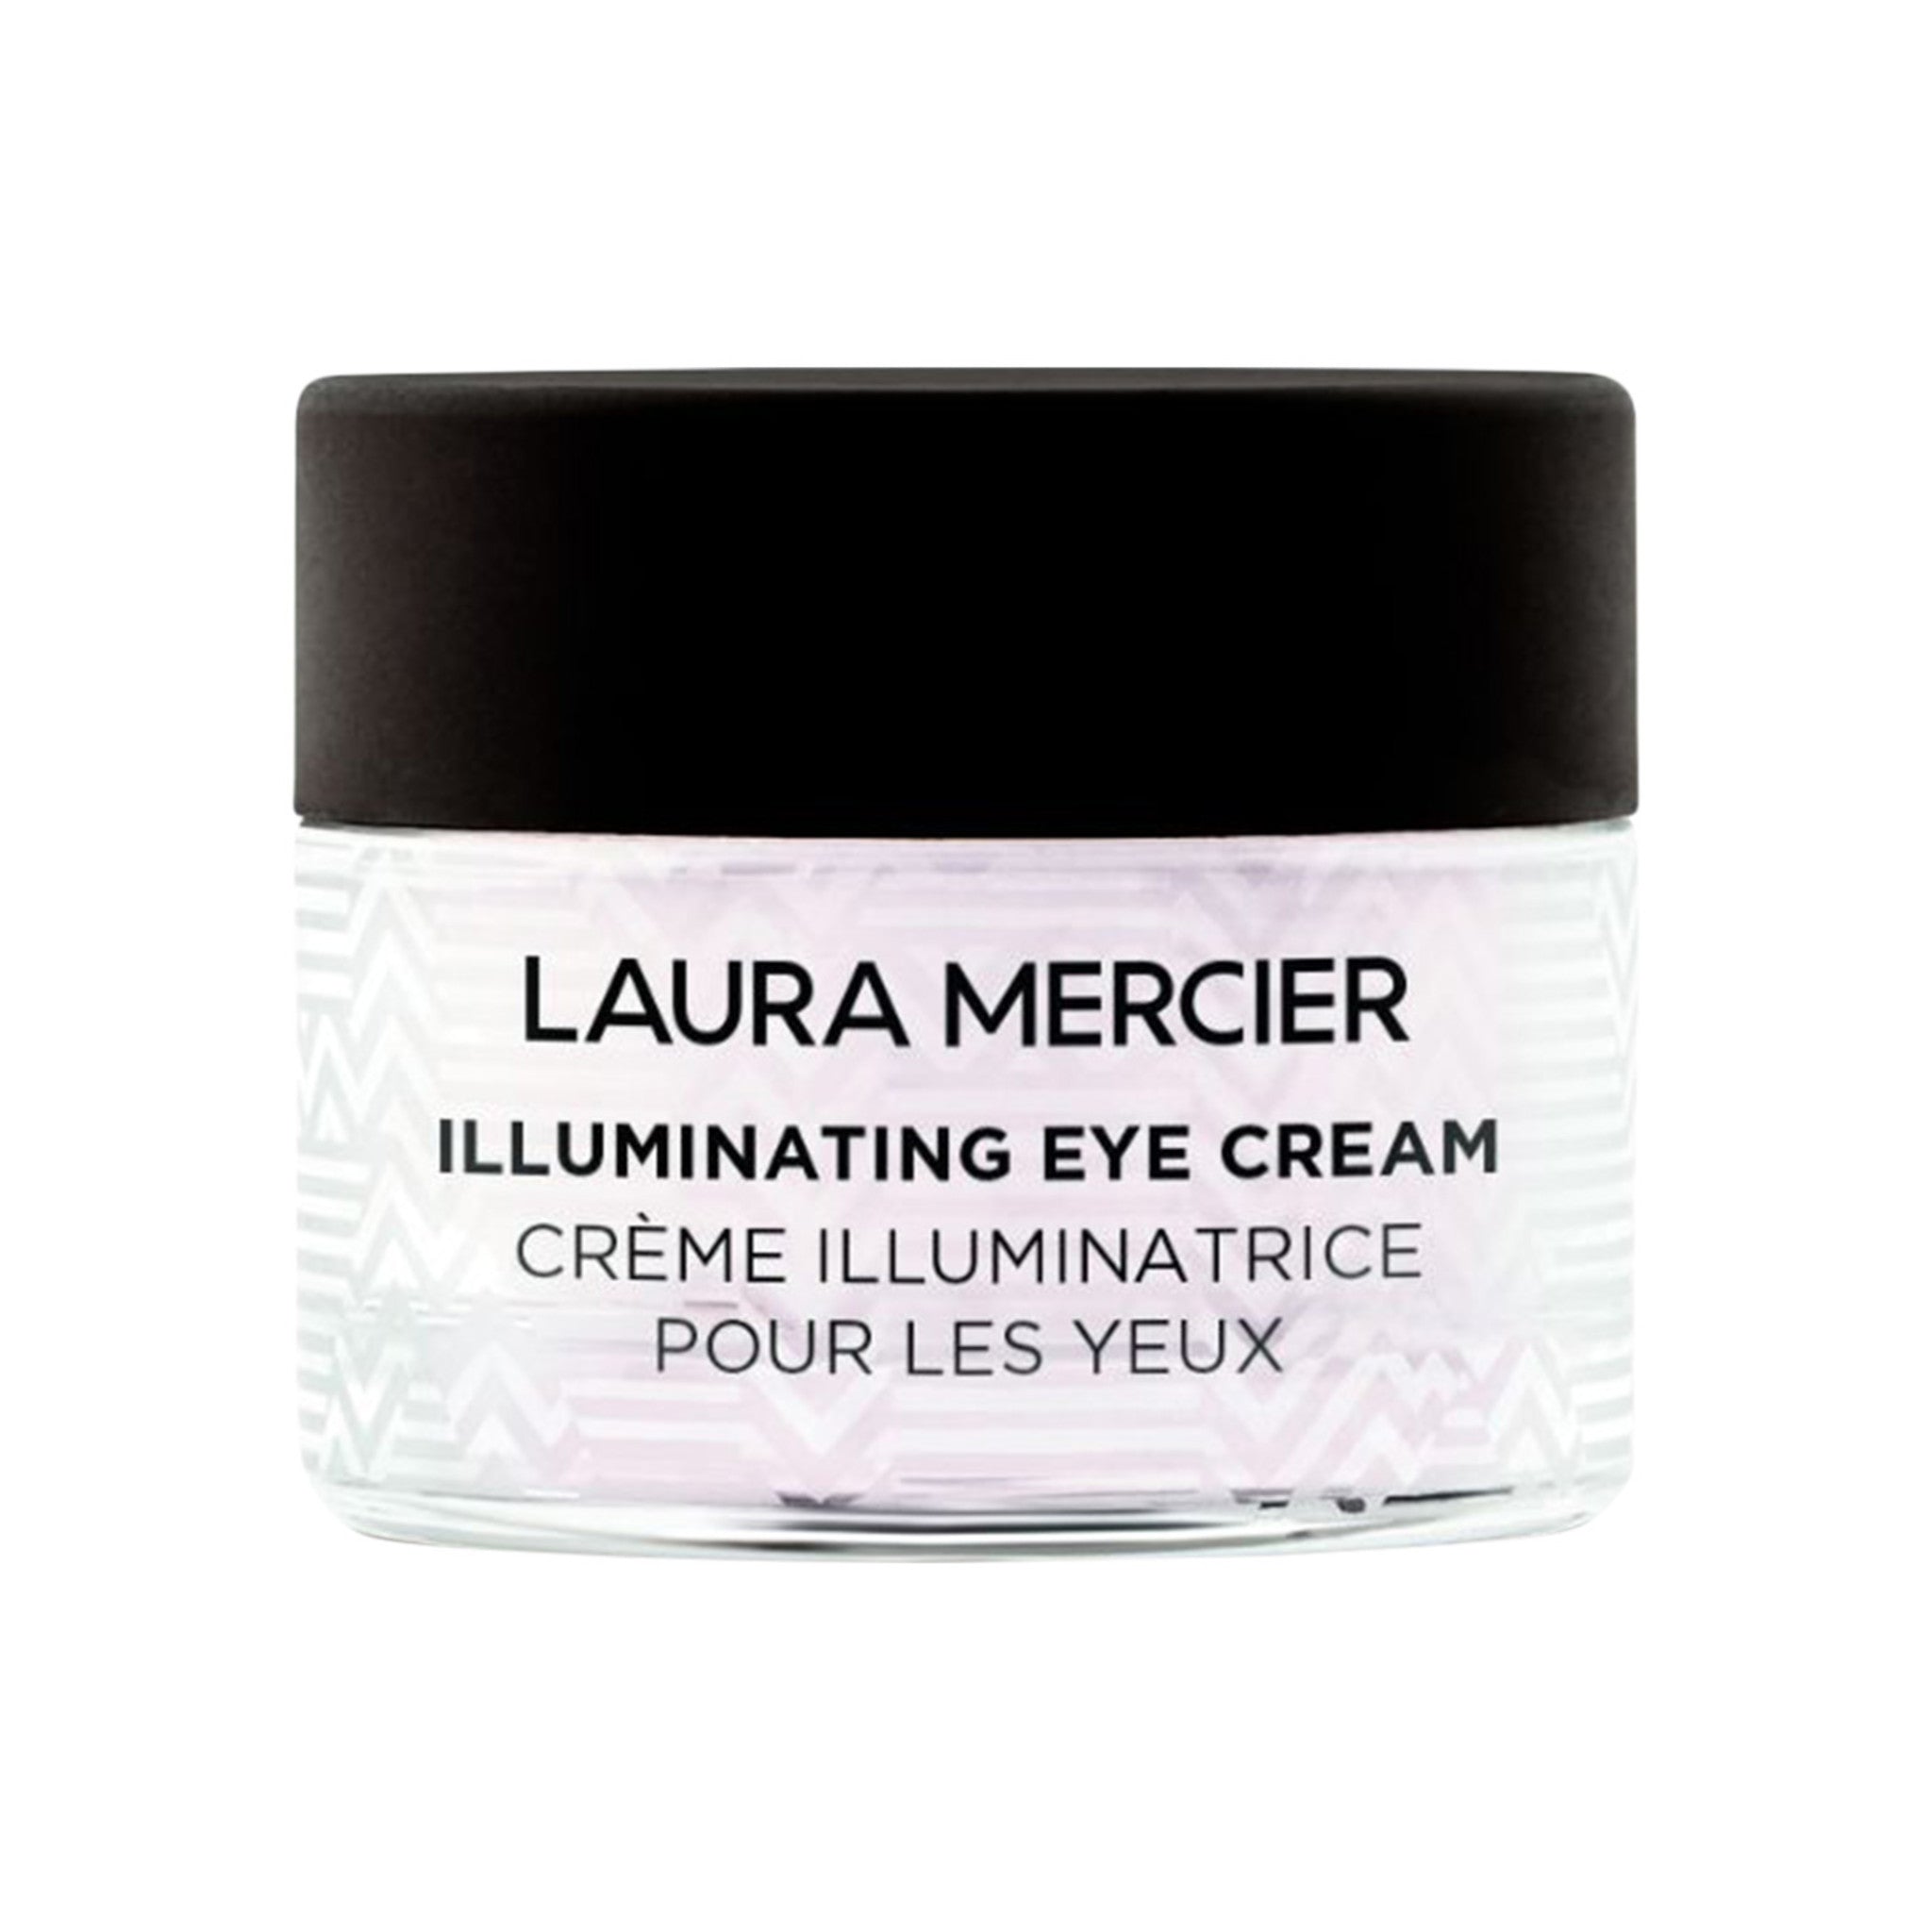 Laura Mercier Illuminating Eye Cream main image.